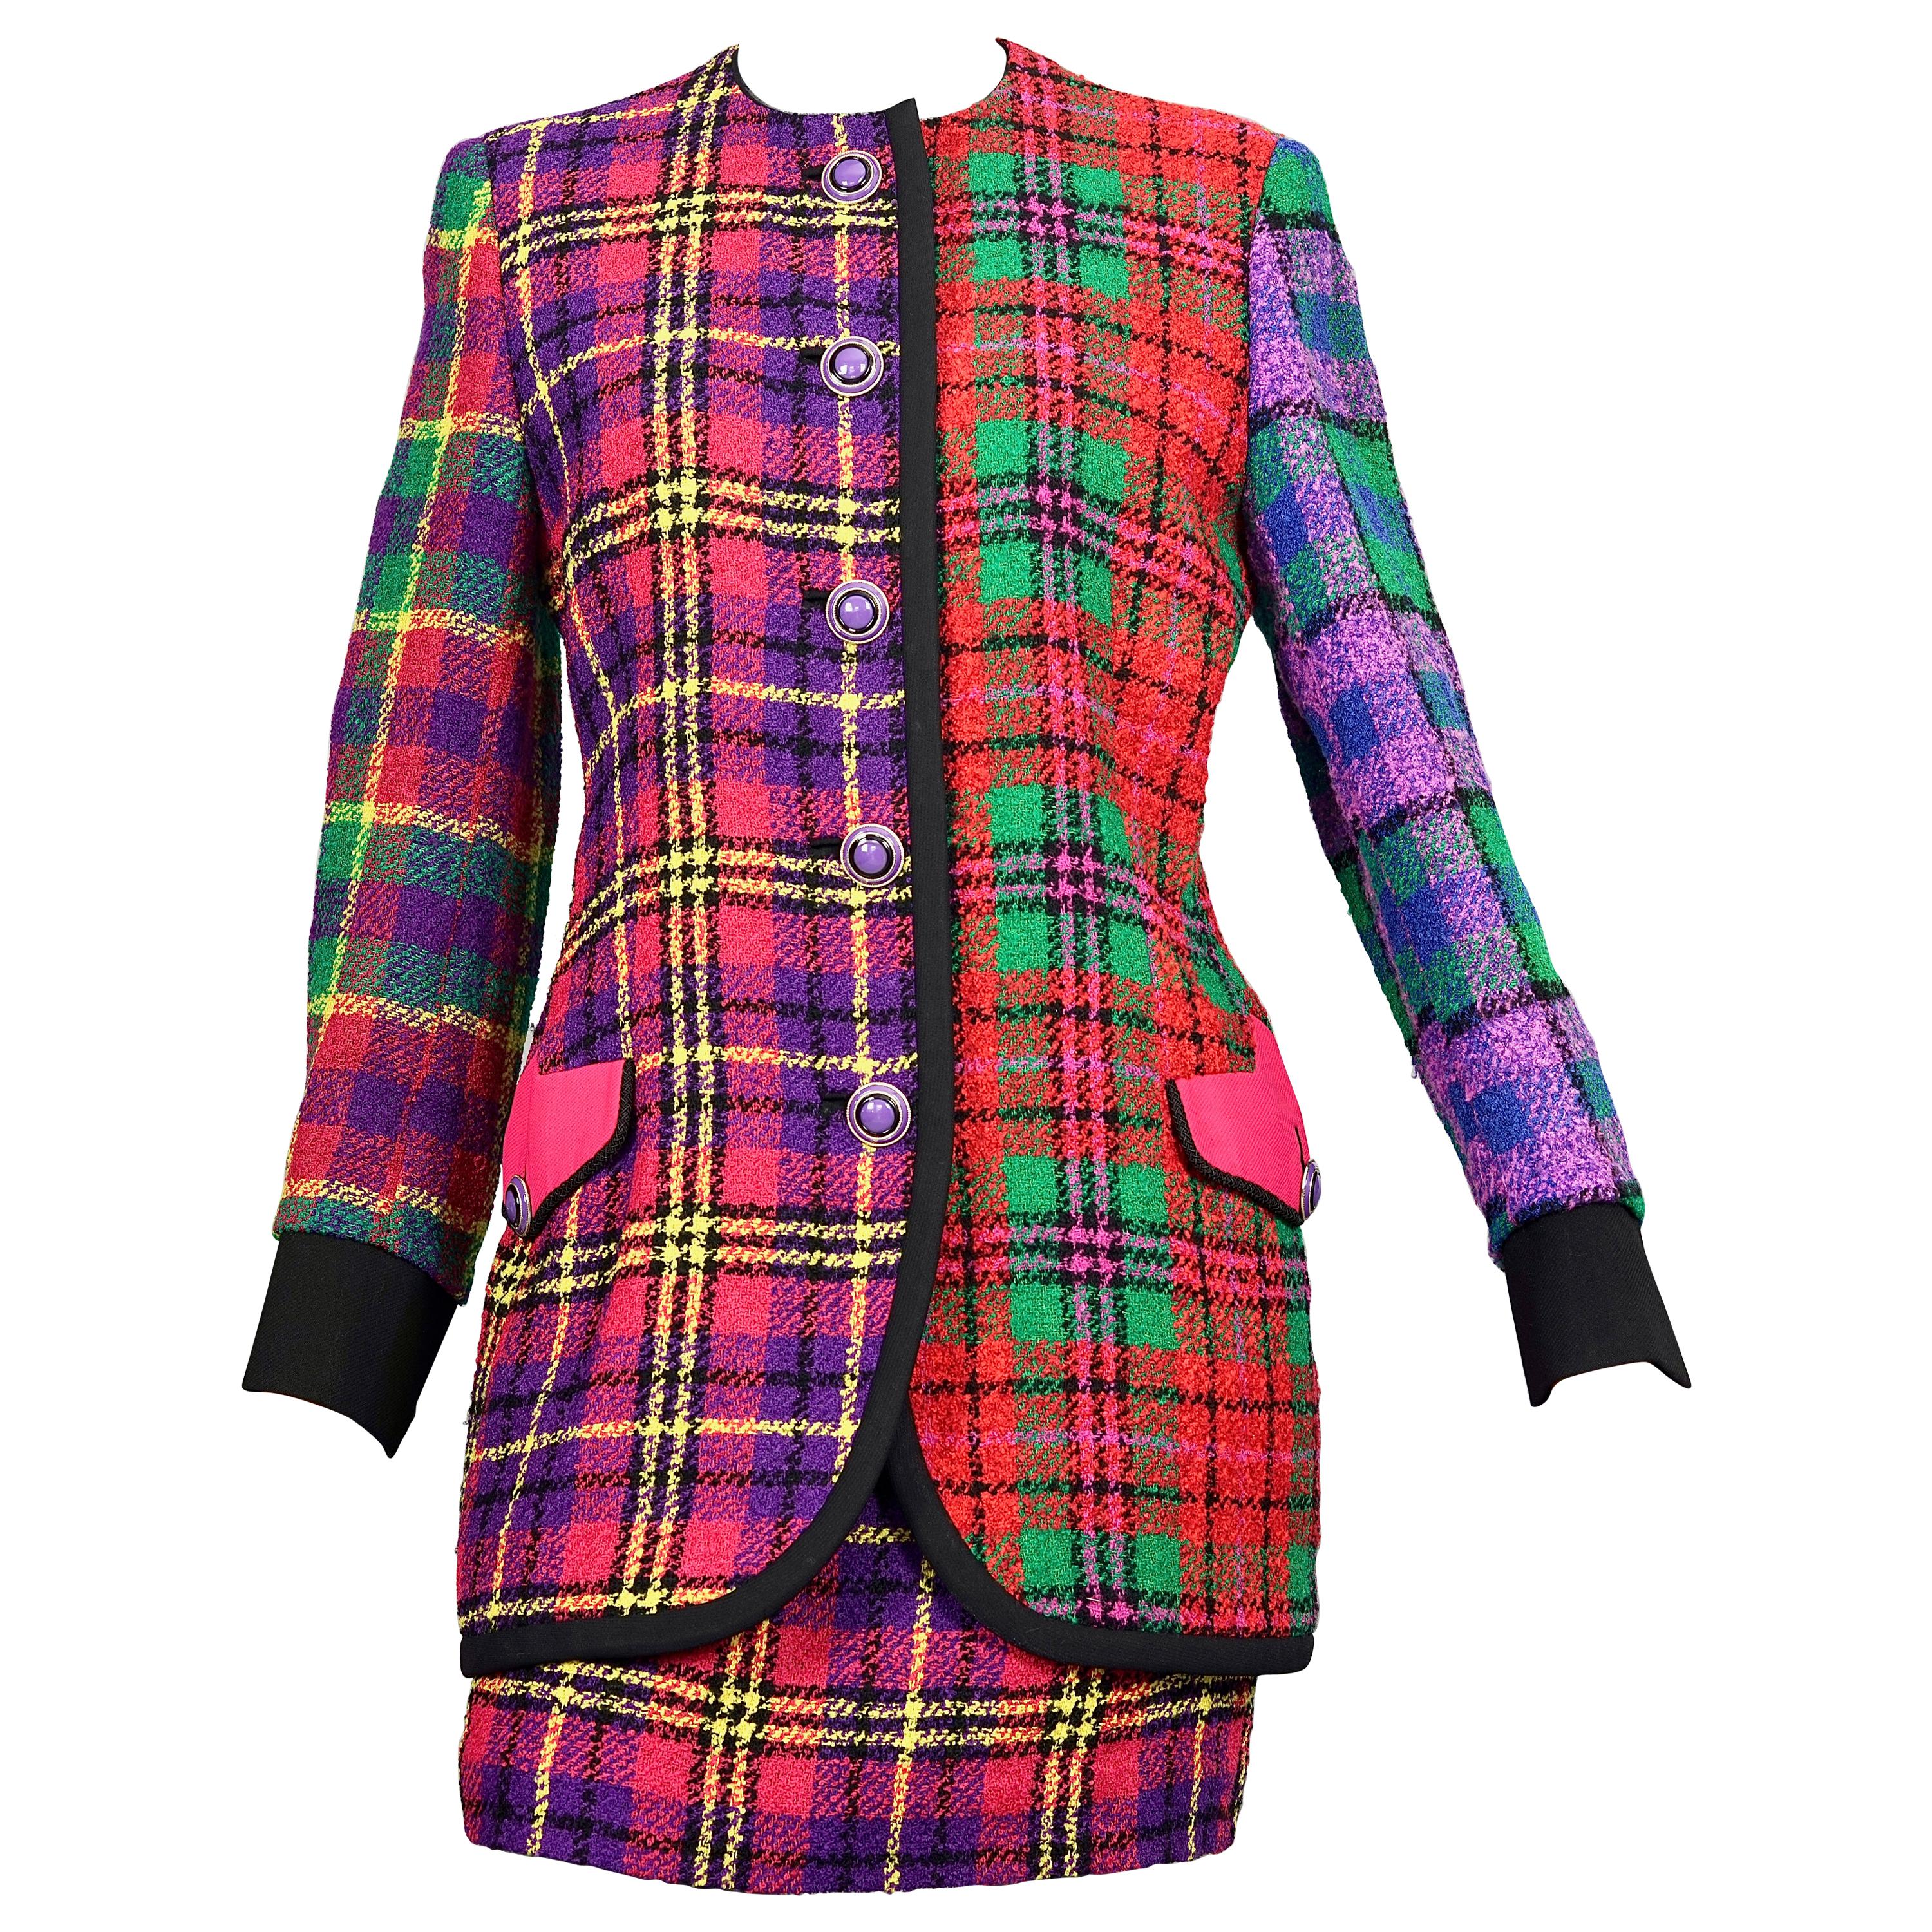 Vintage 1991 A/W GIANNI VERSACE Couture Plaid Tartan Patchwork Jacket Skirt Suit For Sale